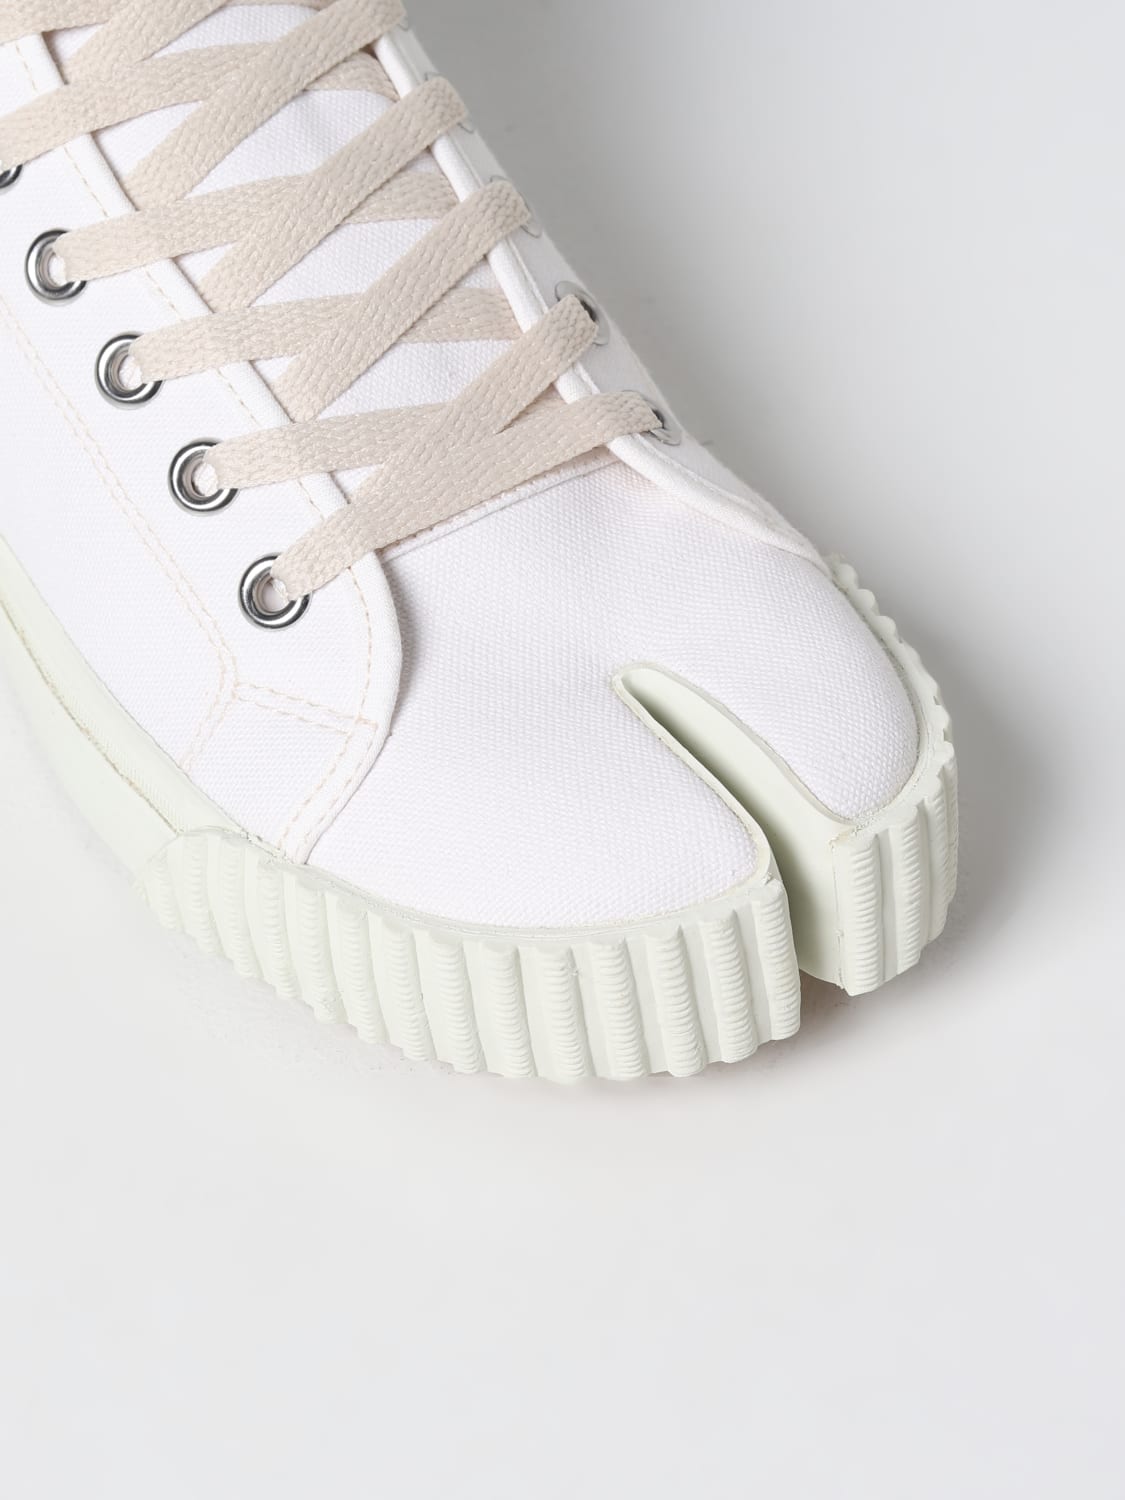 Men's Shoes  Off-White™ Official Website